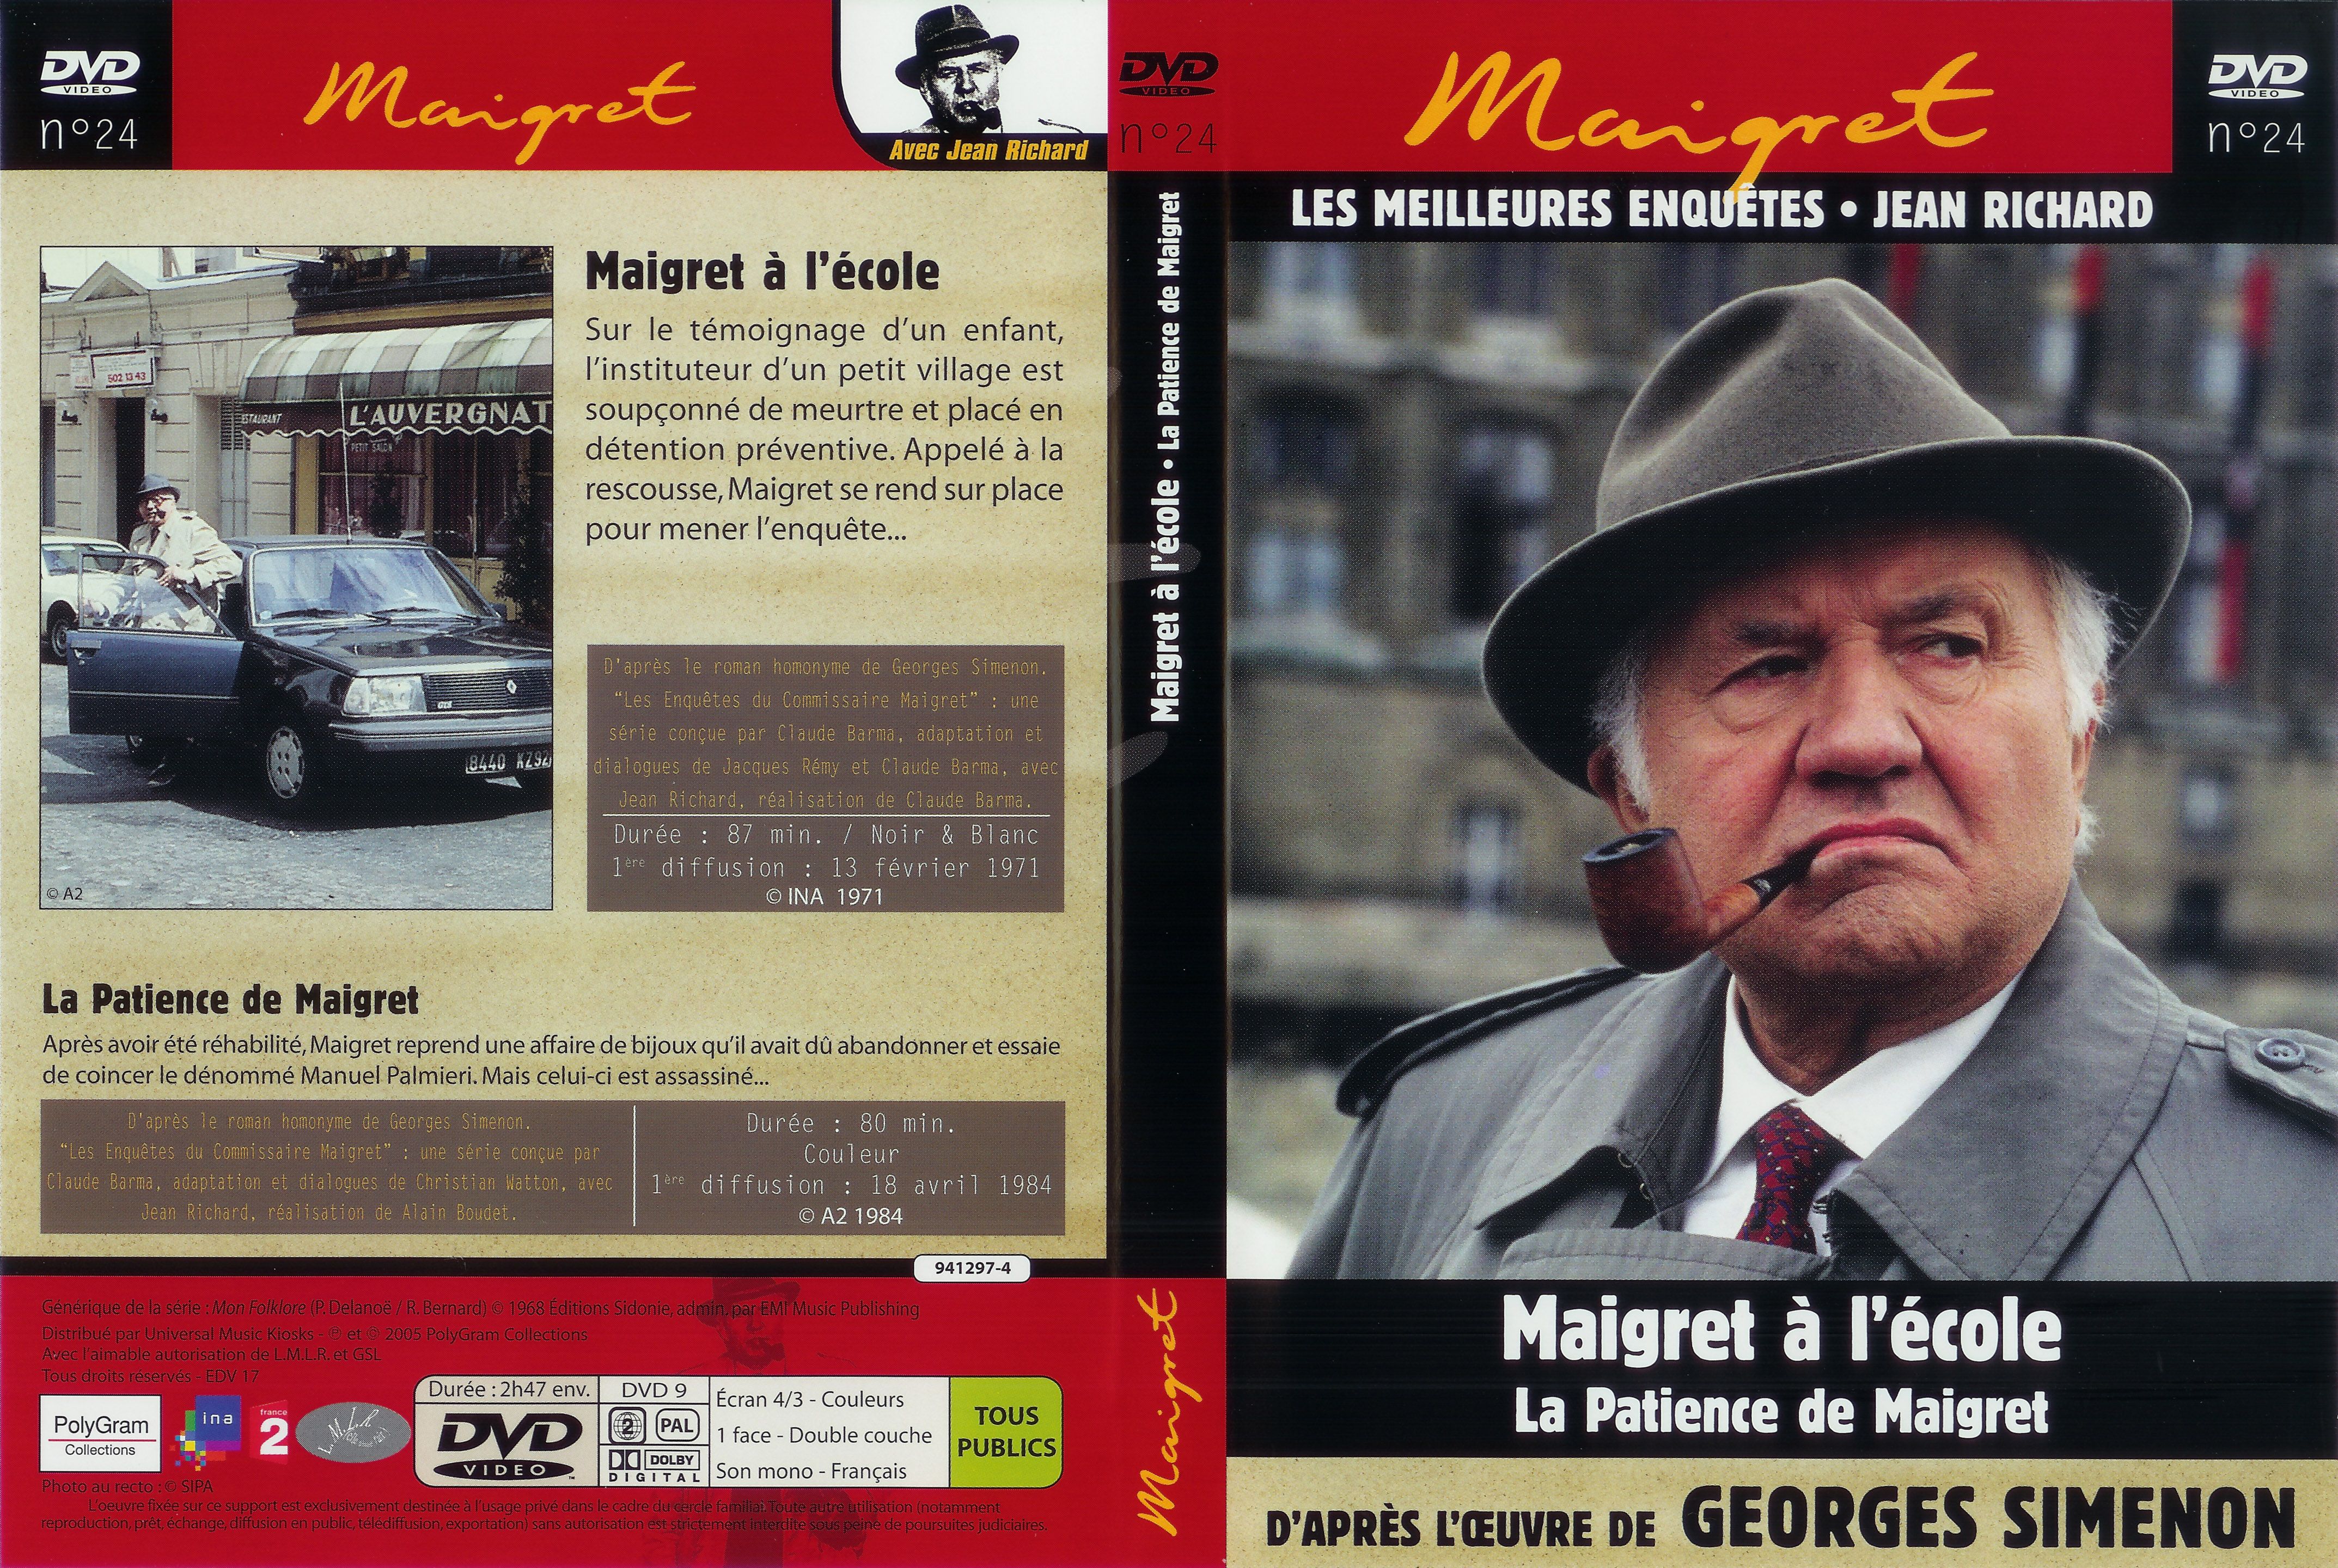 Jaquette DVD Maigret (Jean Richard) vol 24